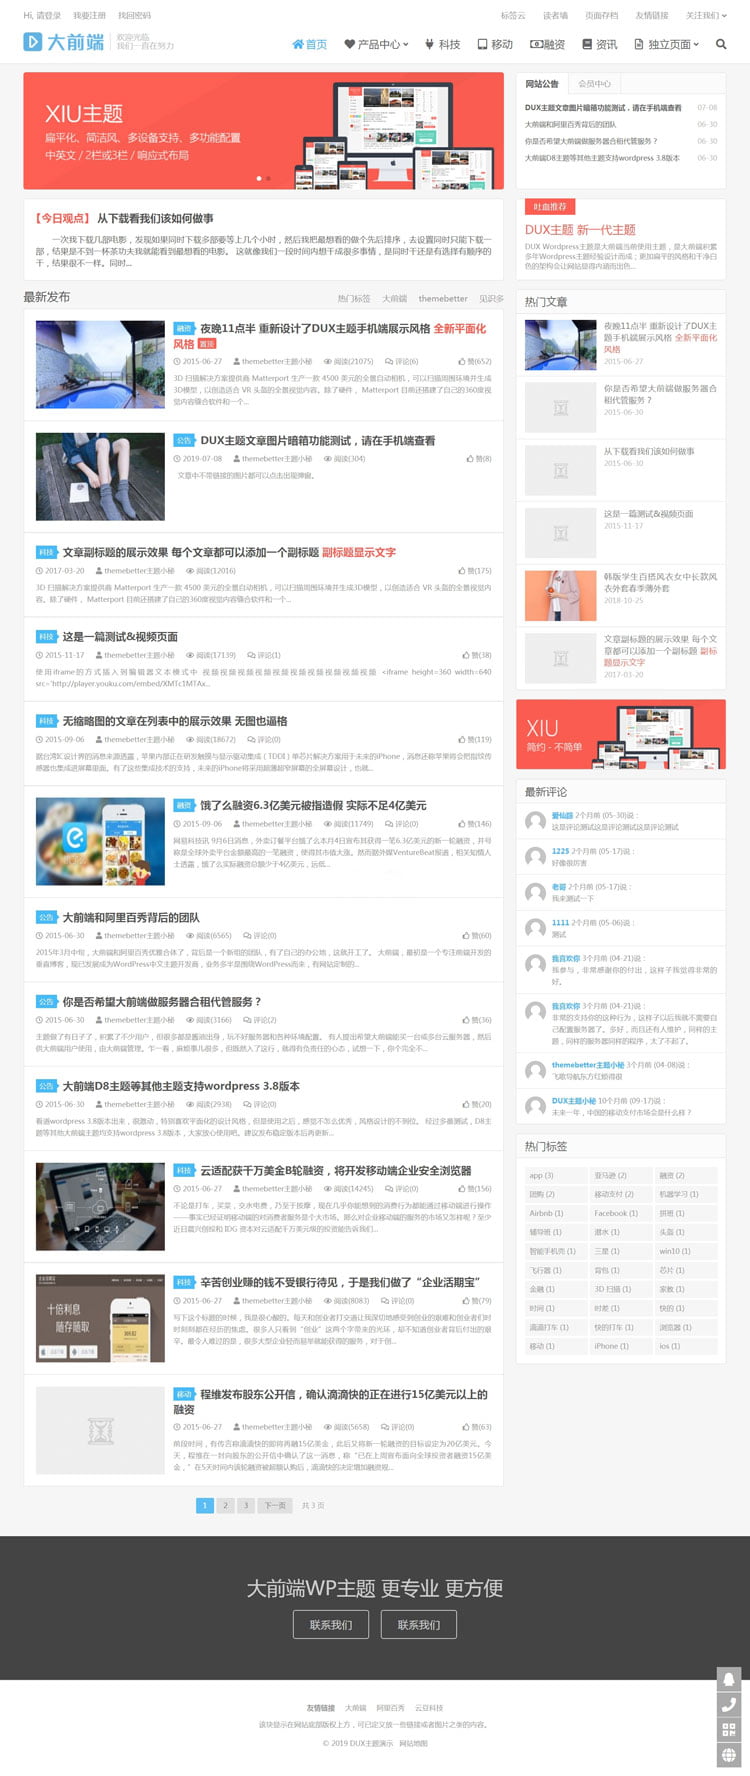 WordPressDUX v6.4免授权开心版 - 宅自学